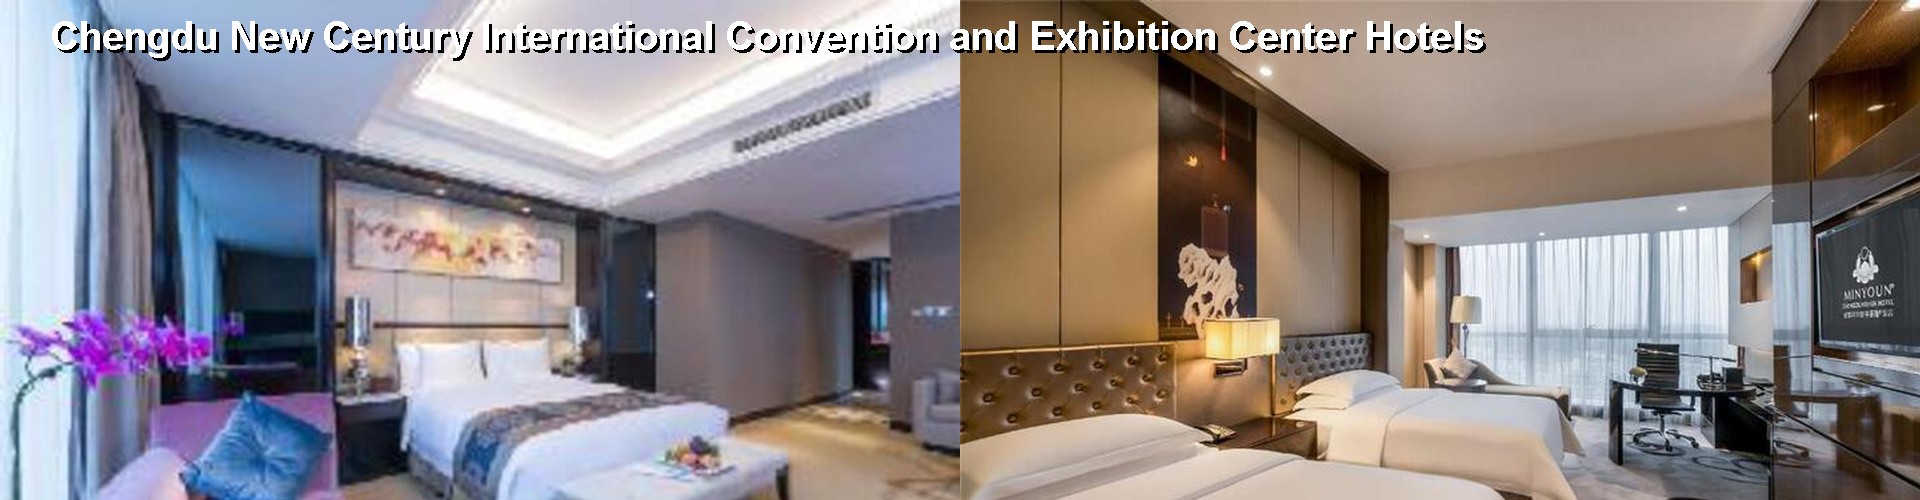 4 Best Hotels near Chengdu New Century International Convention and Exhibition Center